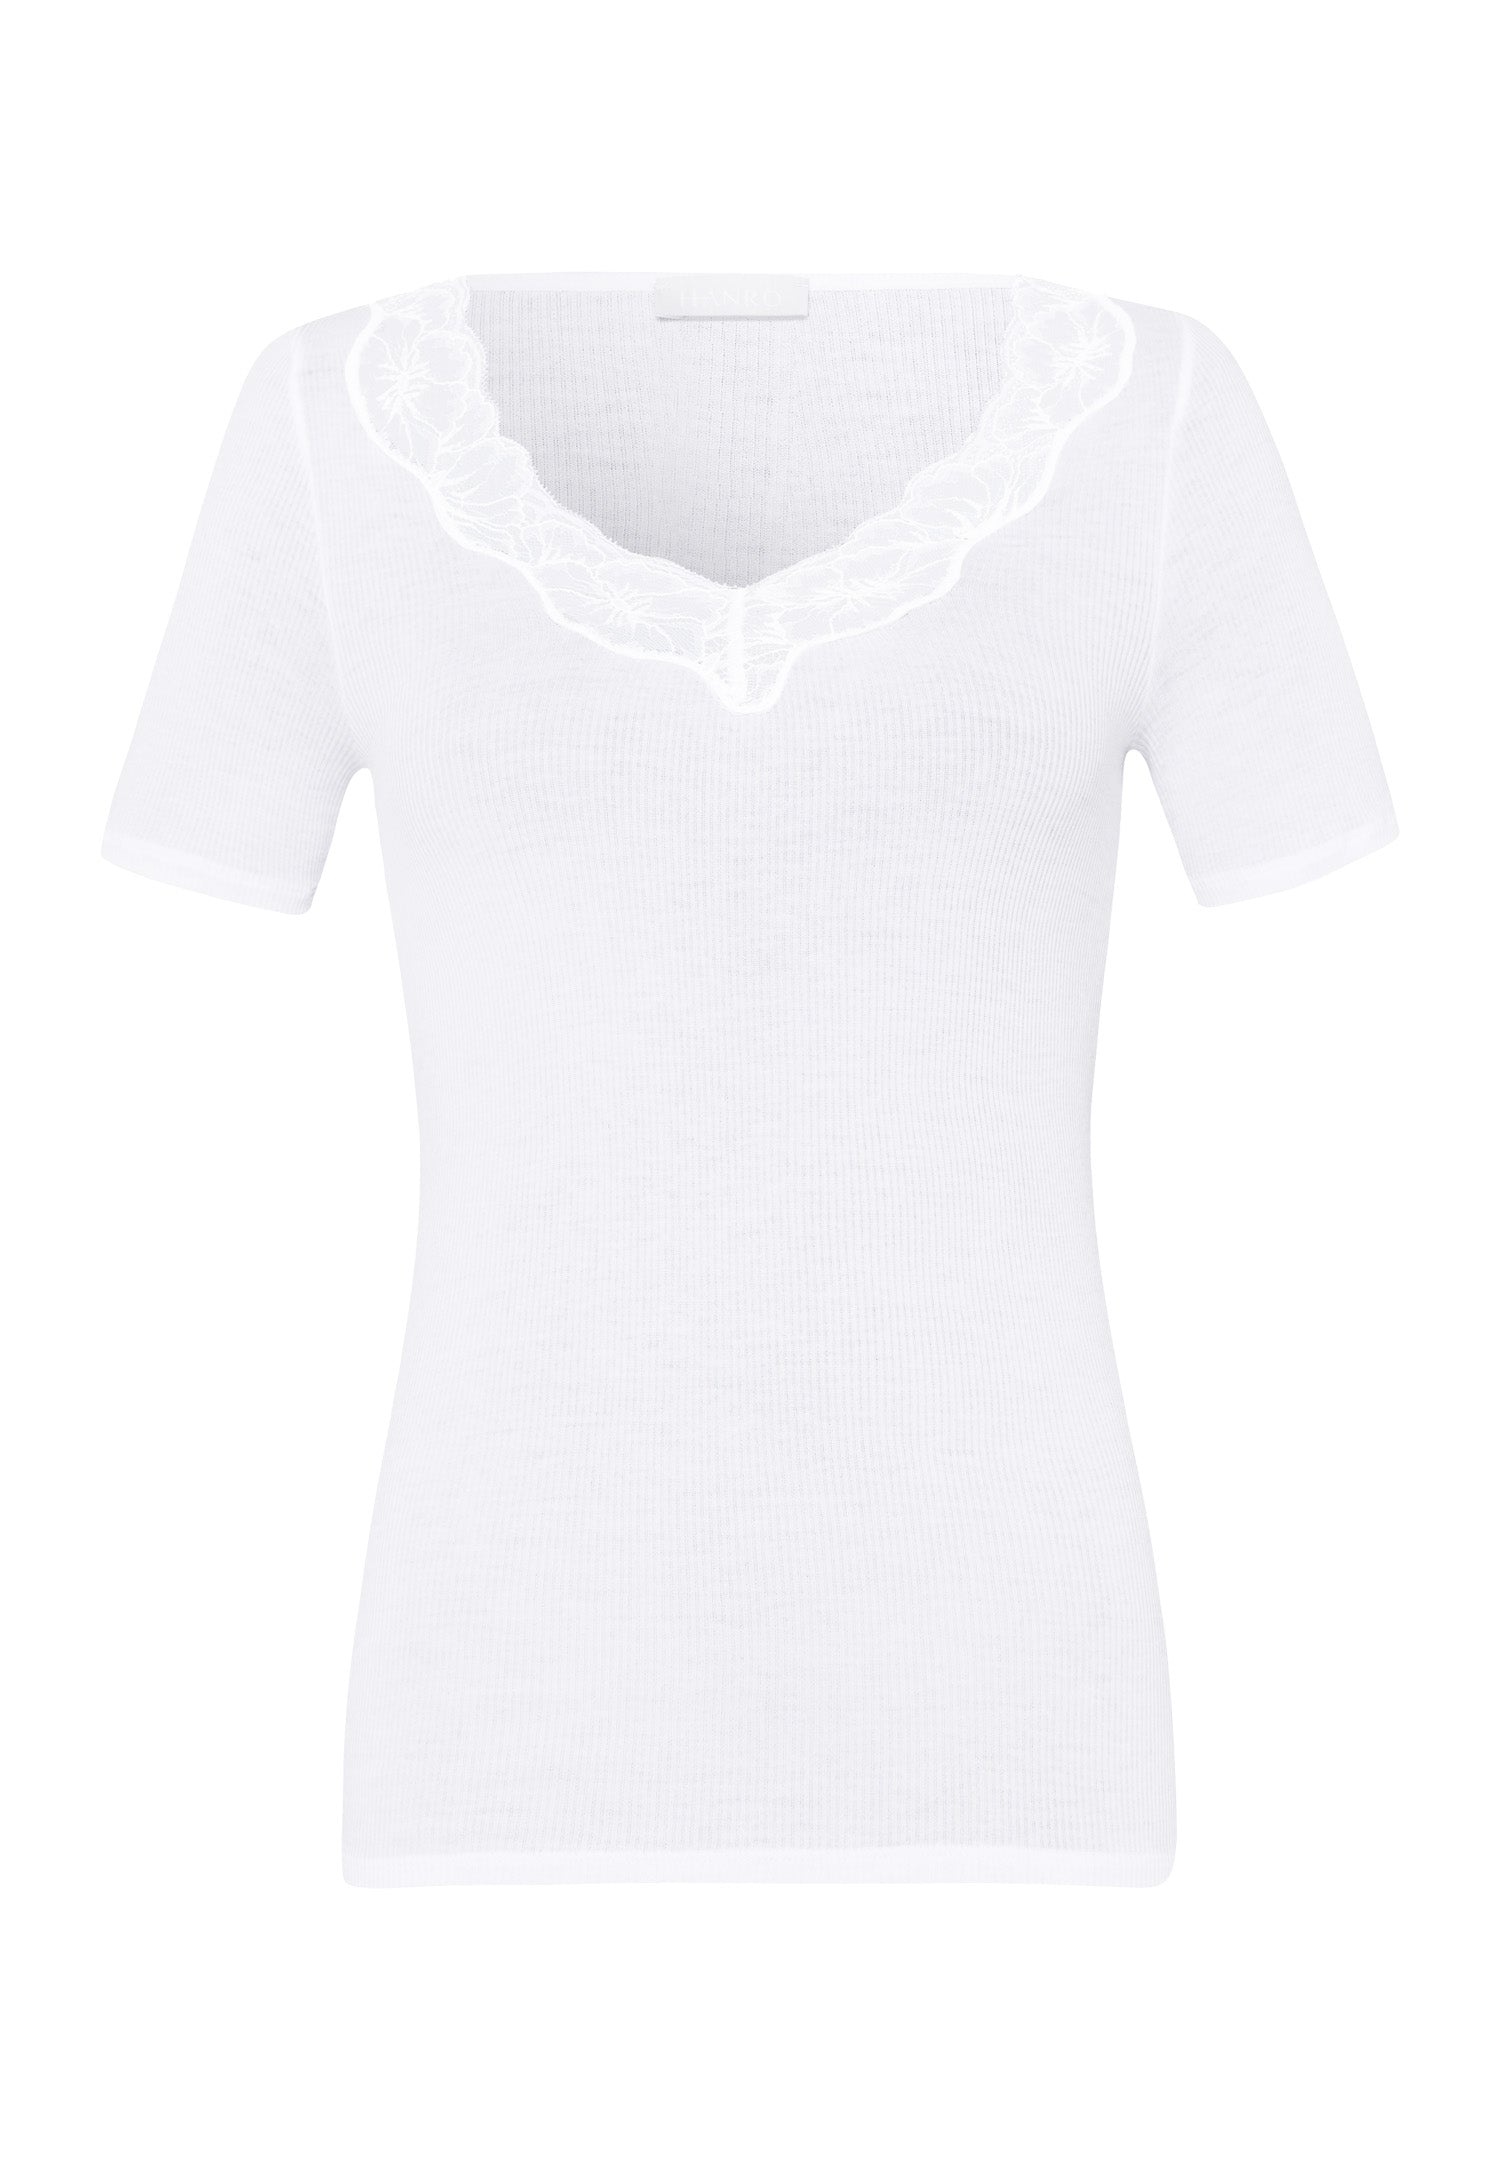 71376 Short Sleeve Shirt - 101 White